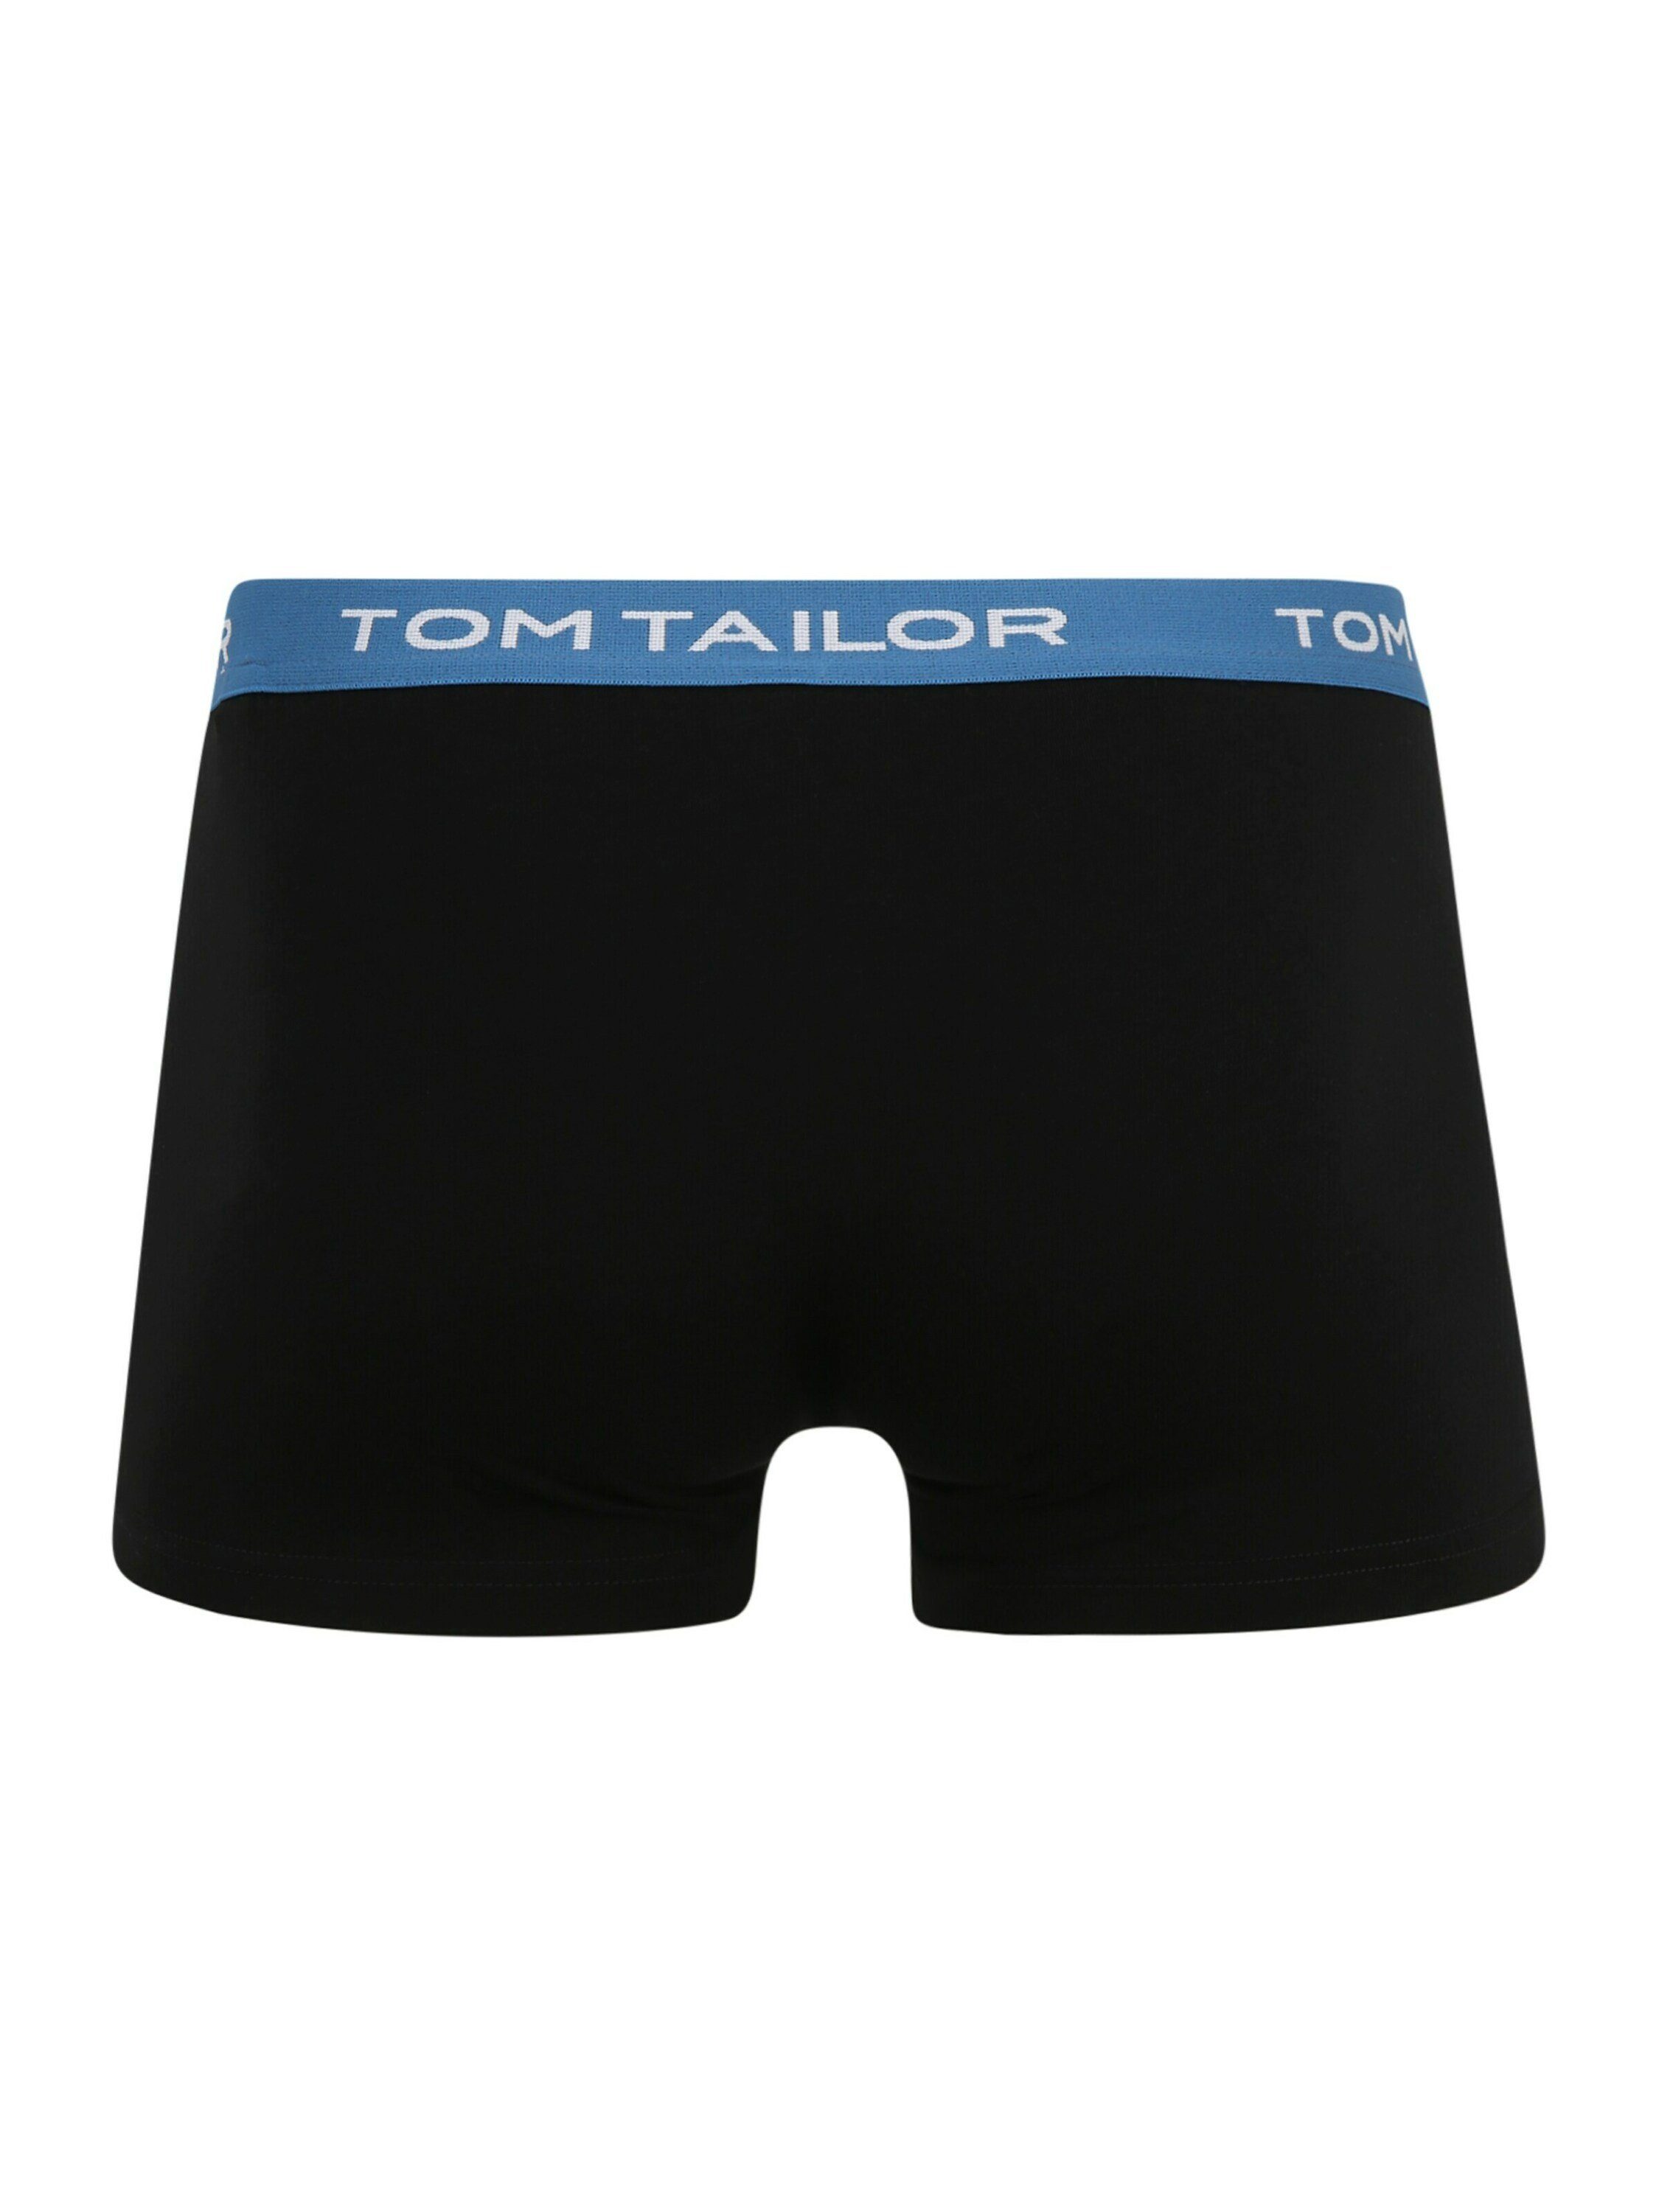 TOM TAILOR Boxershorts (3-St) schwarz-dunkel-uni